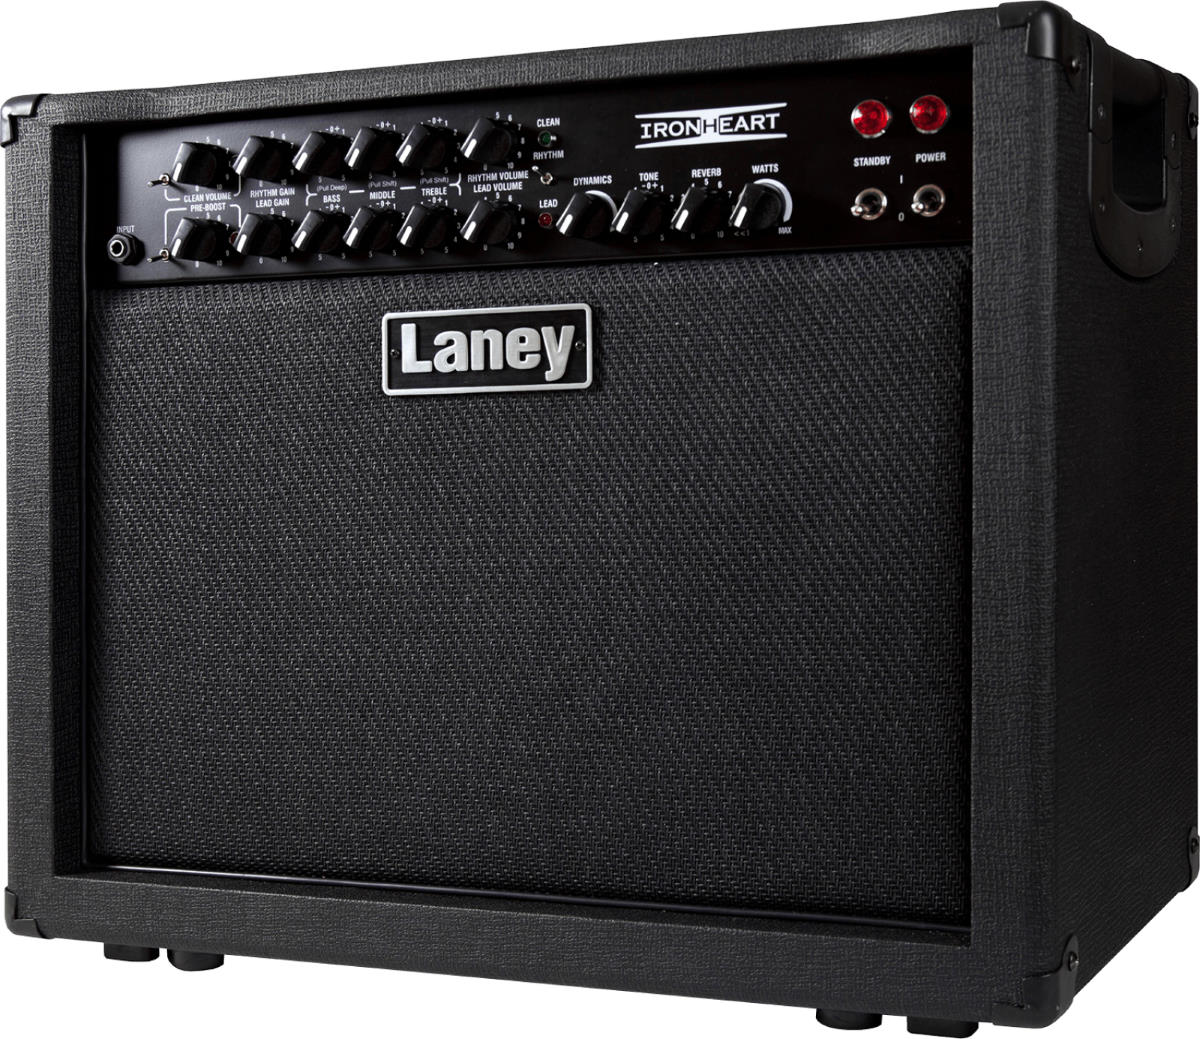 Laney IRT30-112 Ironheart 30W 1x12 Tube Combo Guitar Amp